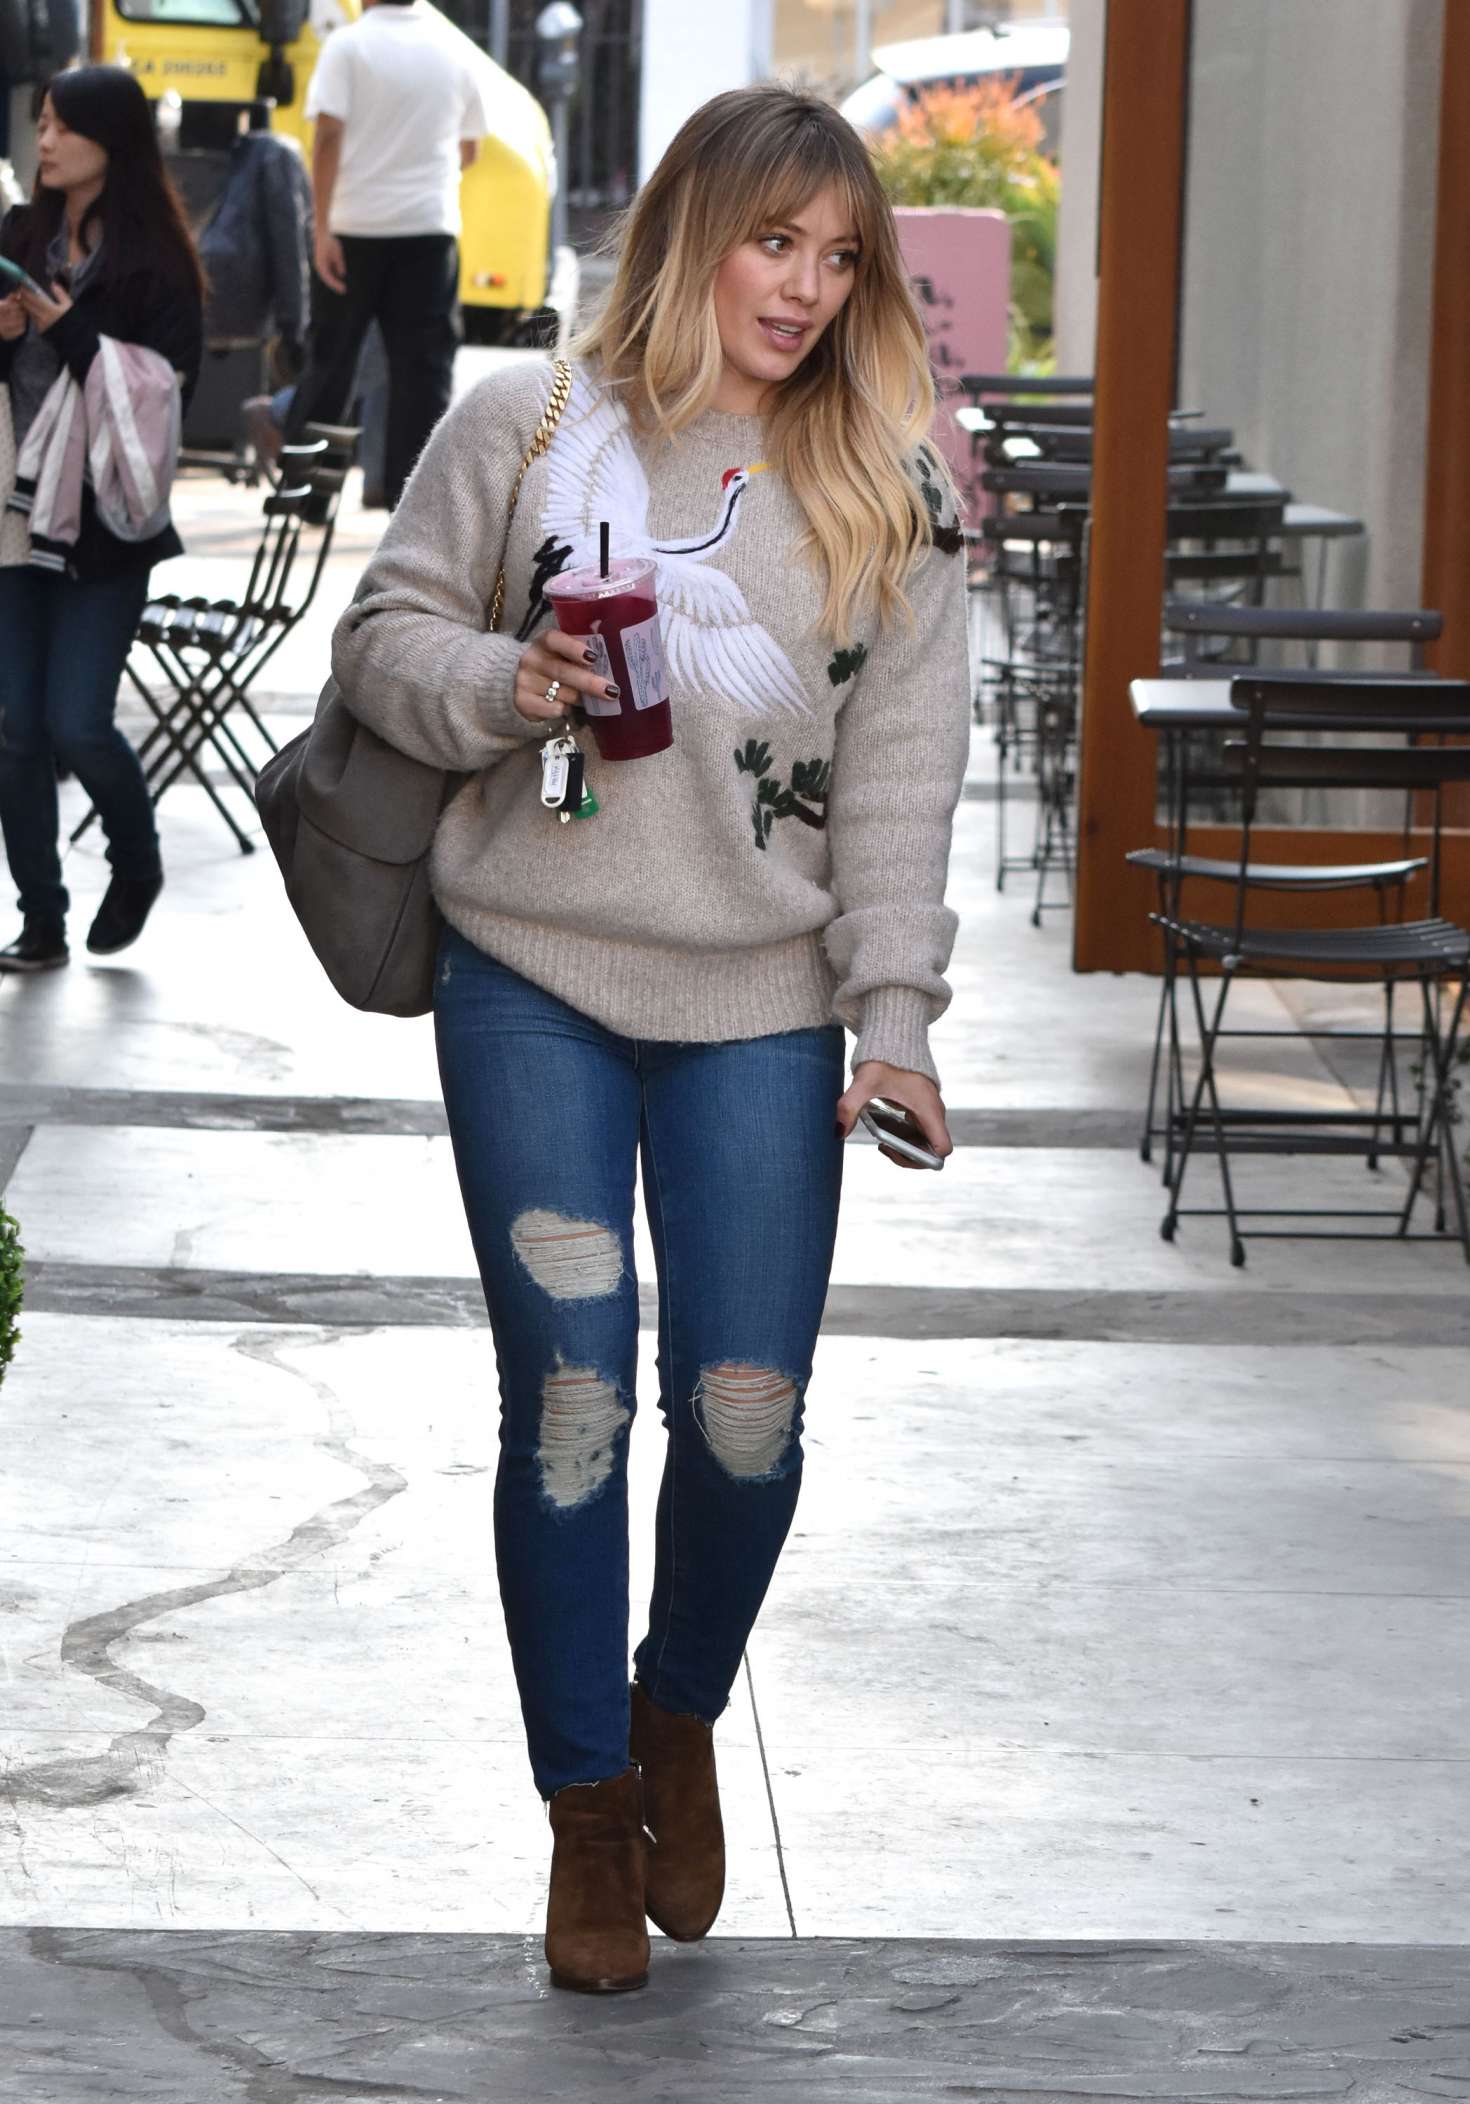 Hilary Duff 2016 : Hilary Duff in Jeans Shopping -03. 